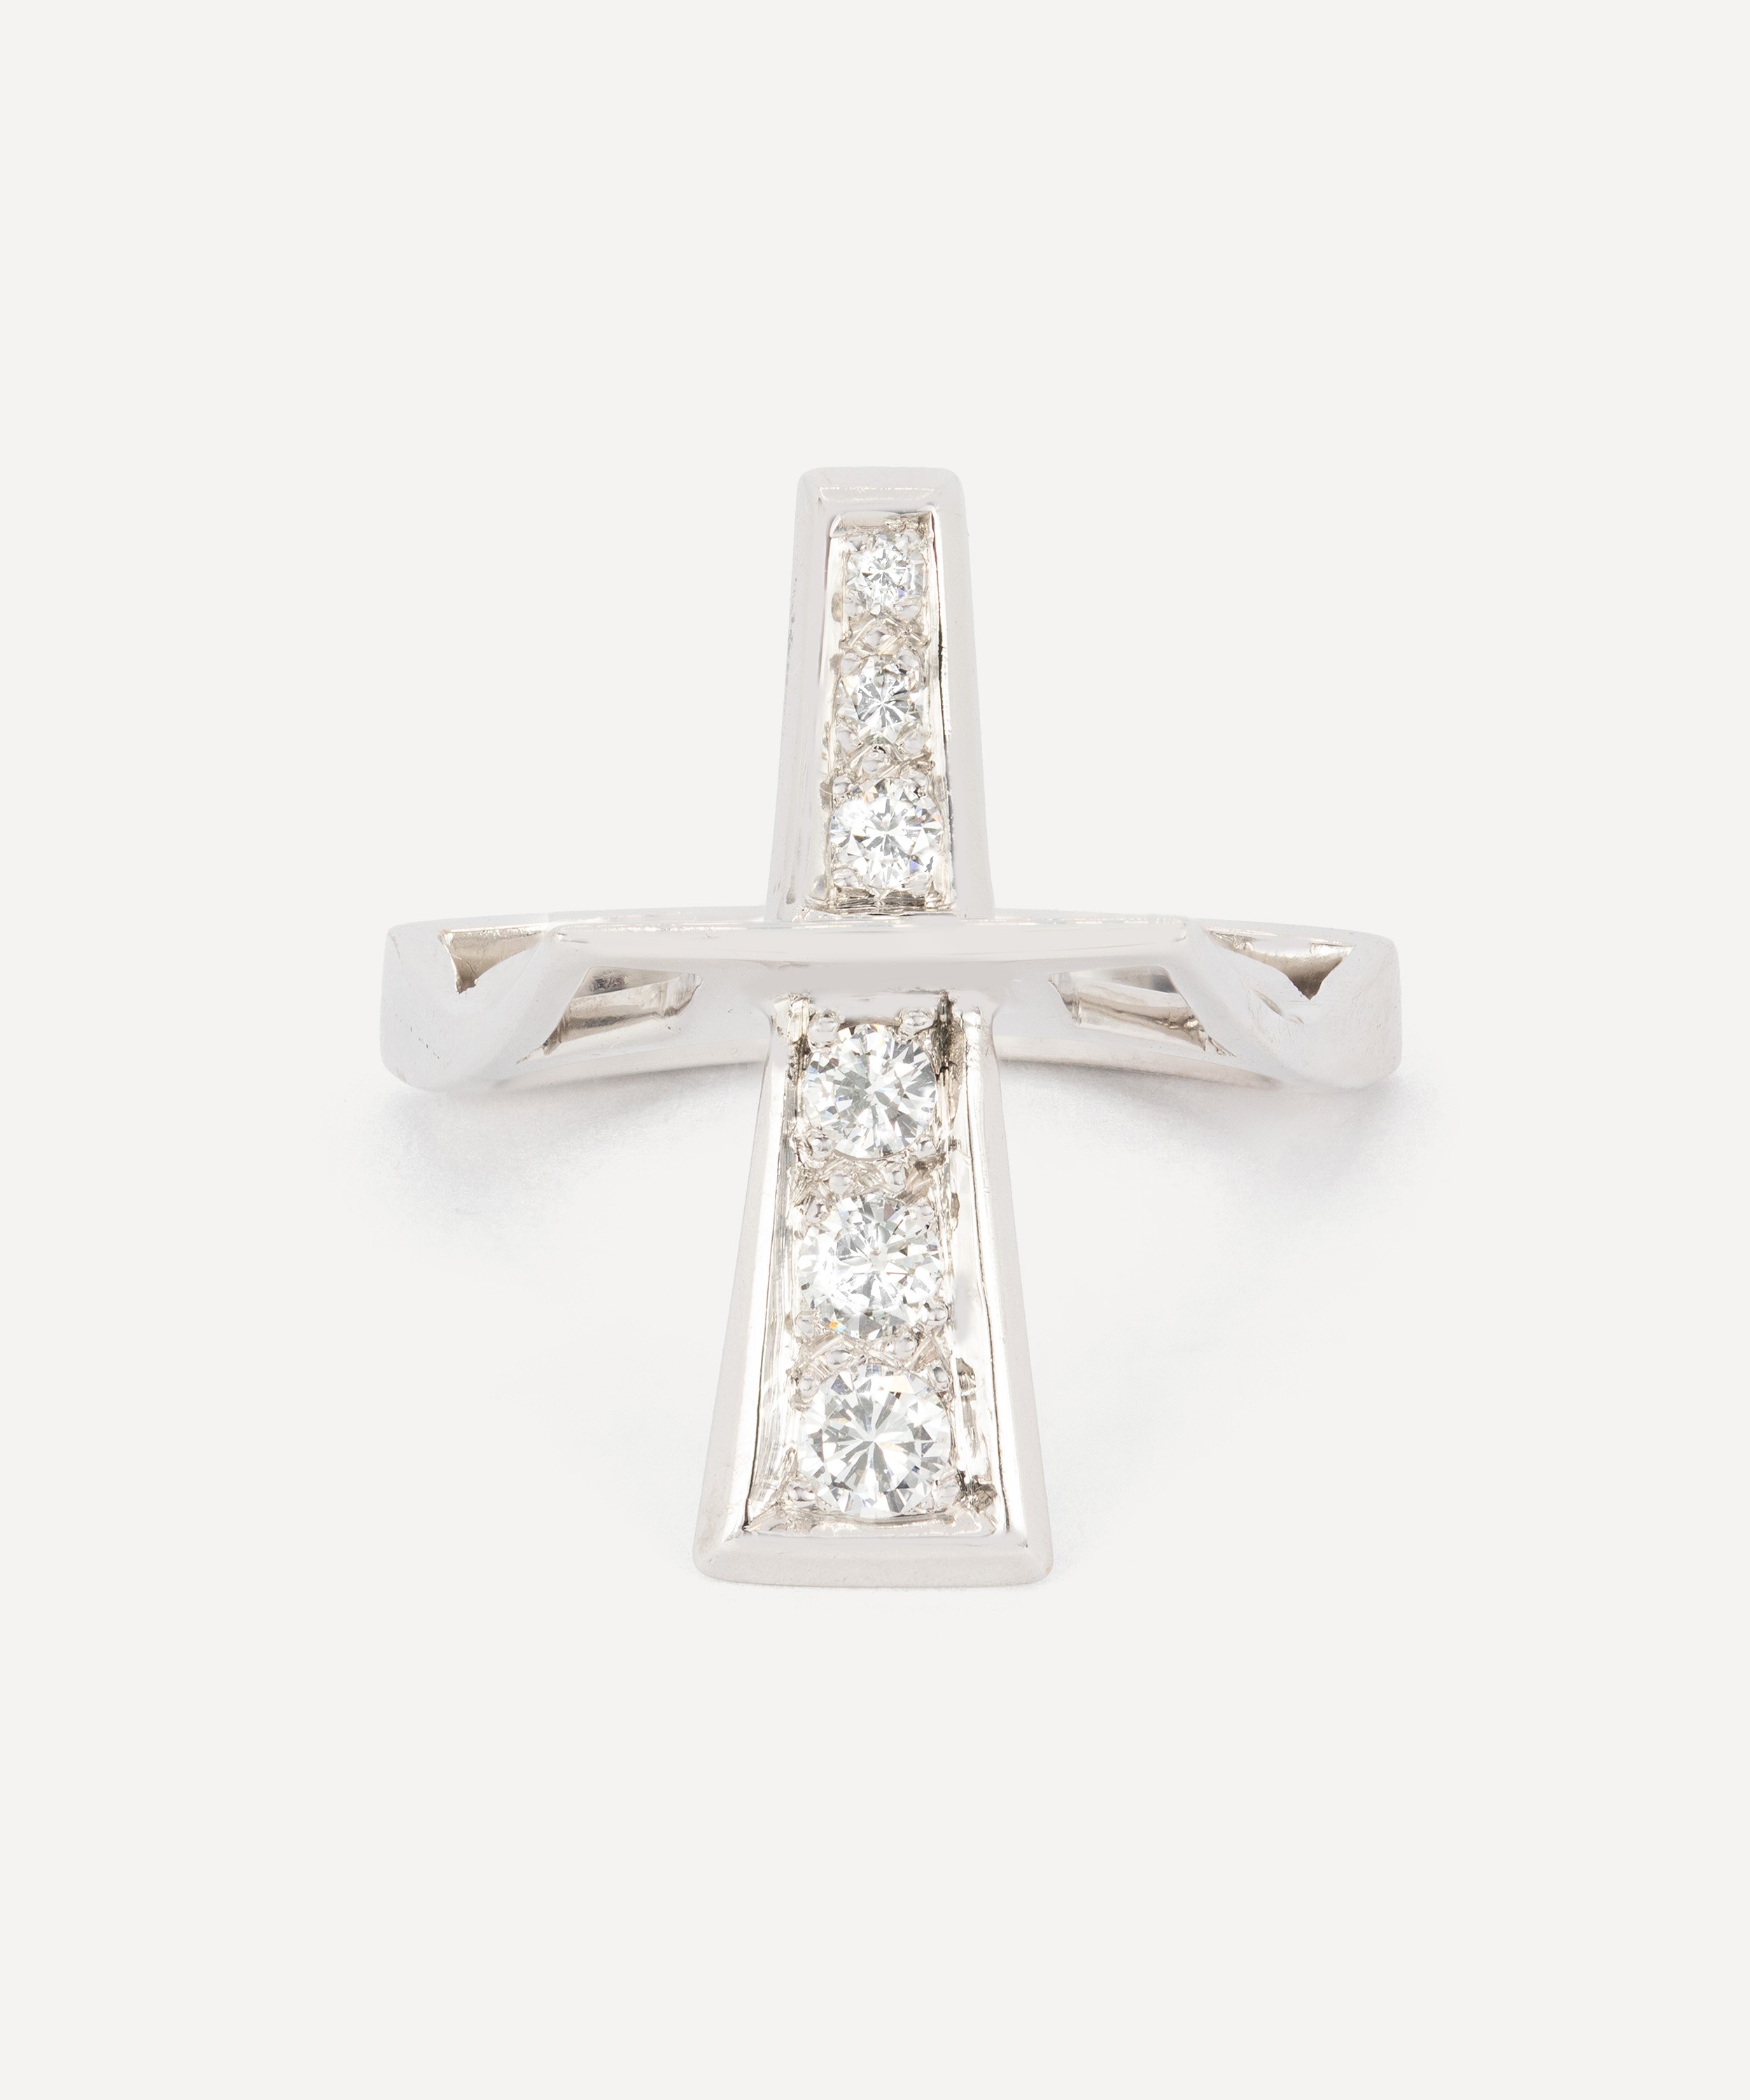 Kojis - 18ct White Gold Modernist Diamond Ring